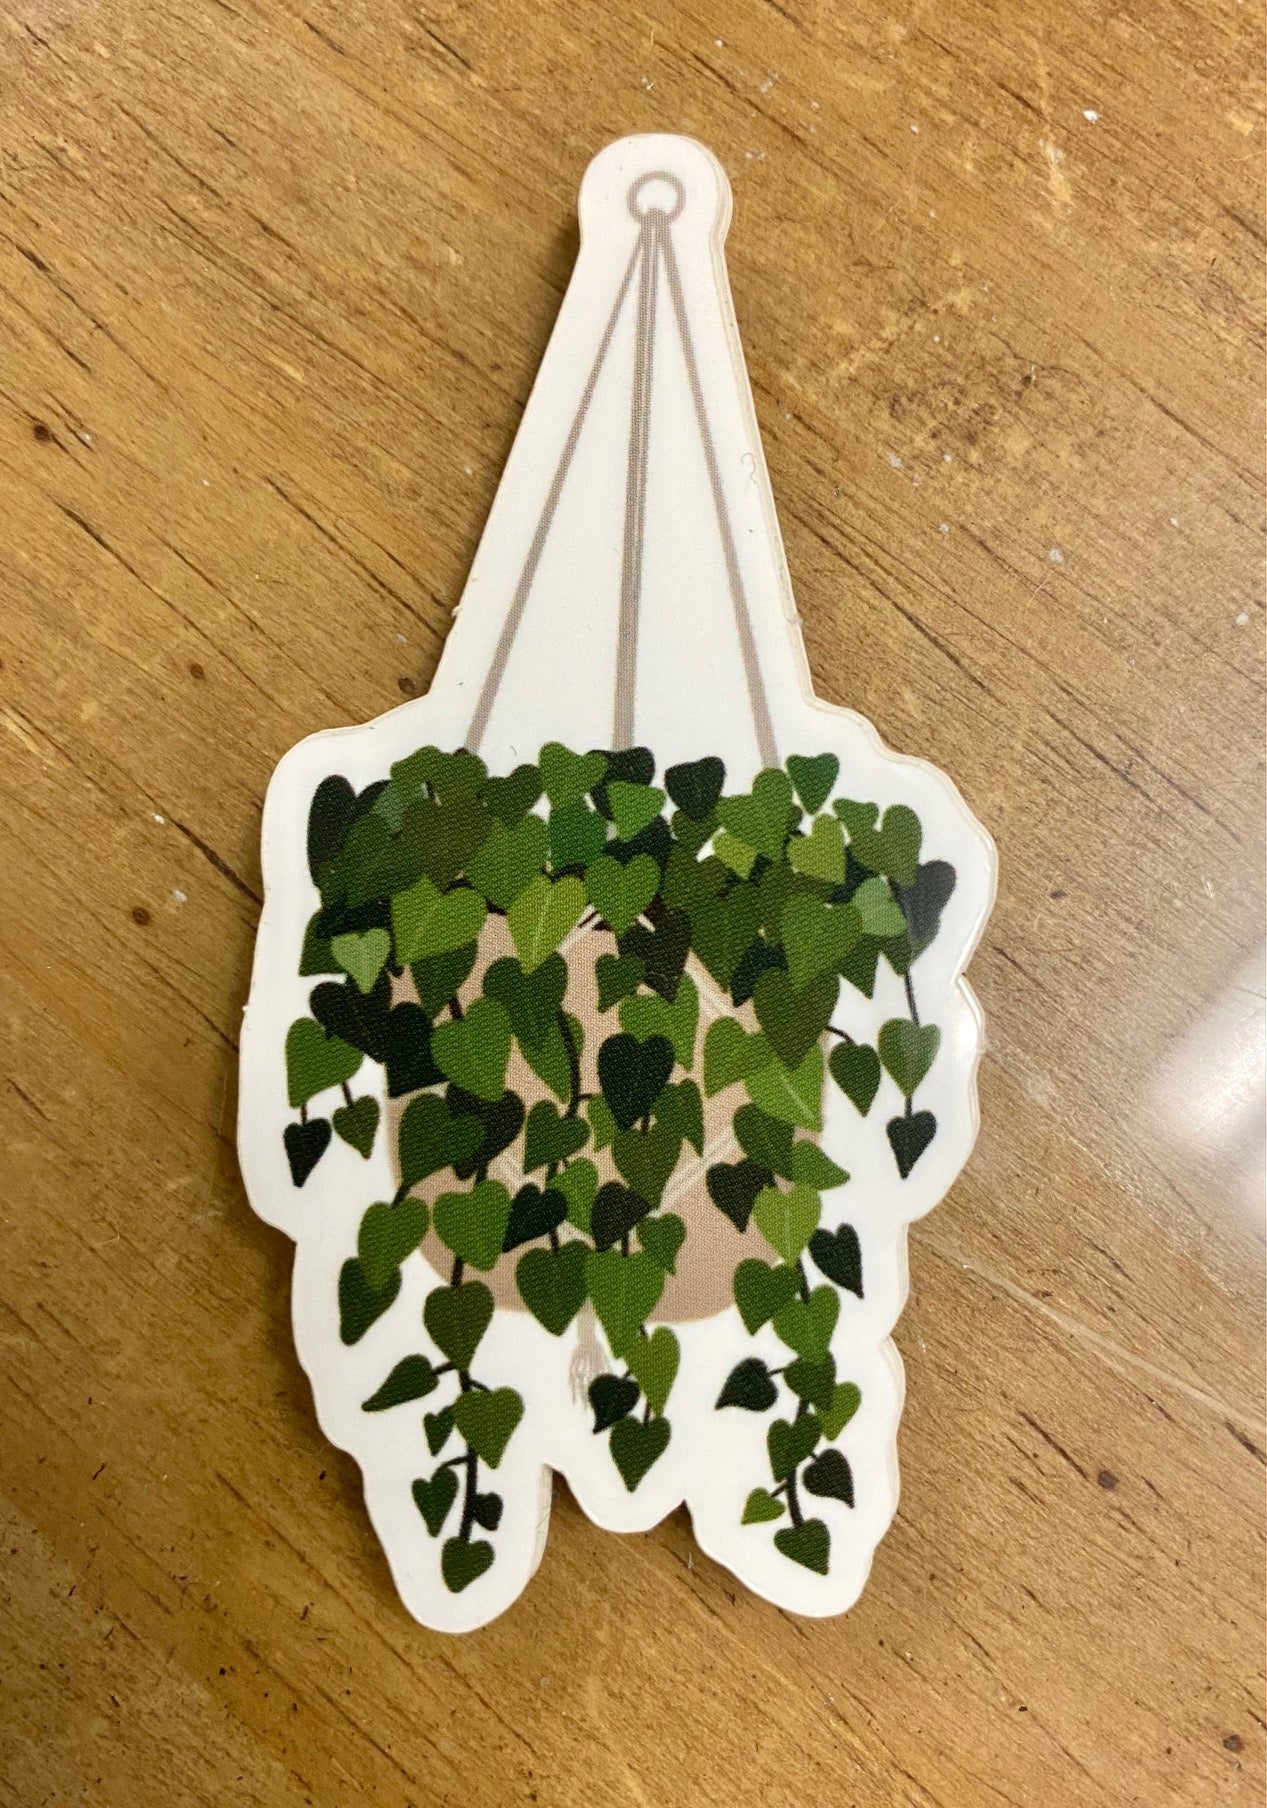 Plant sticker - Hanging plant